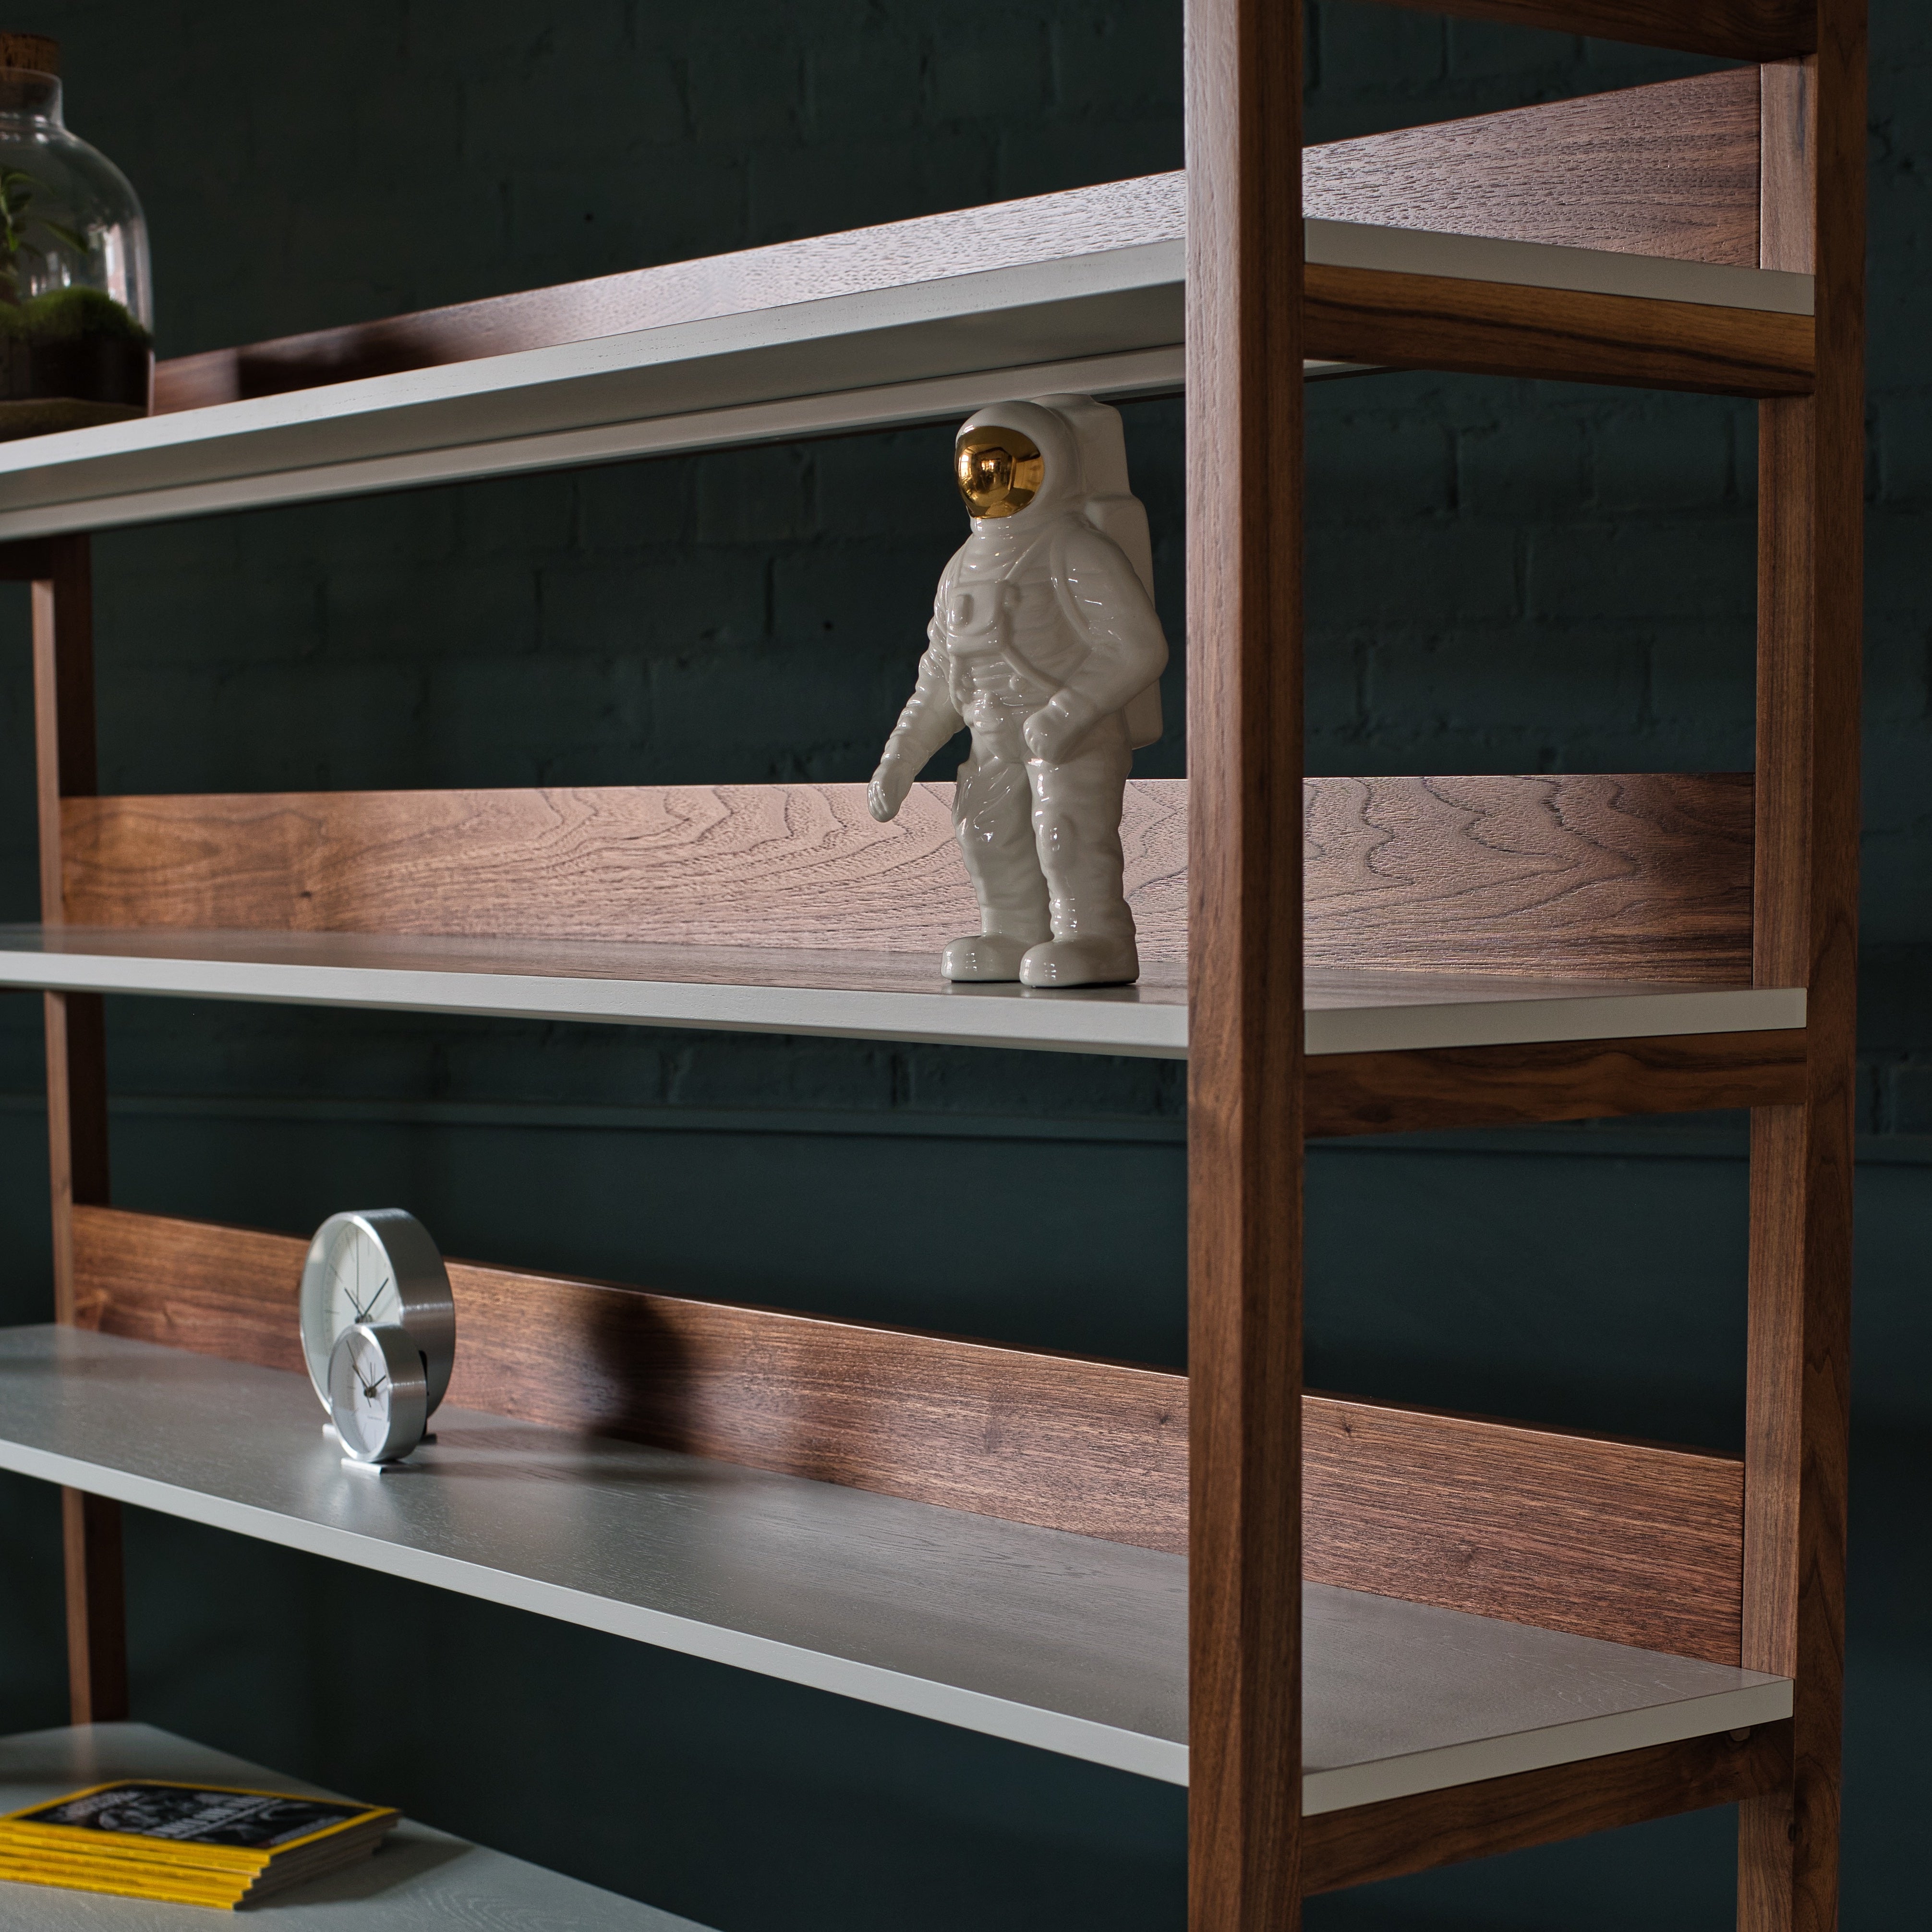 An image of the Walnut Shelving Unit, Inka product available from Koda Studios